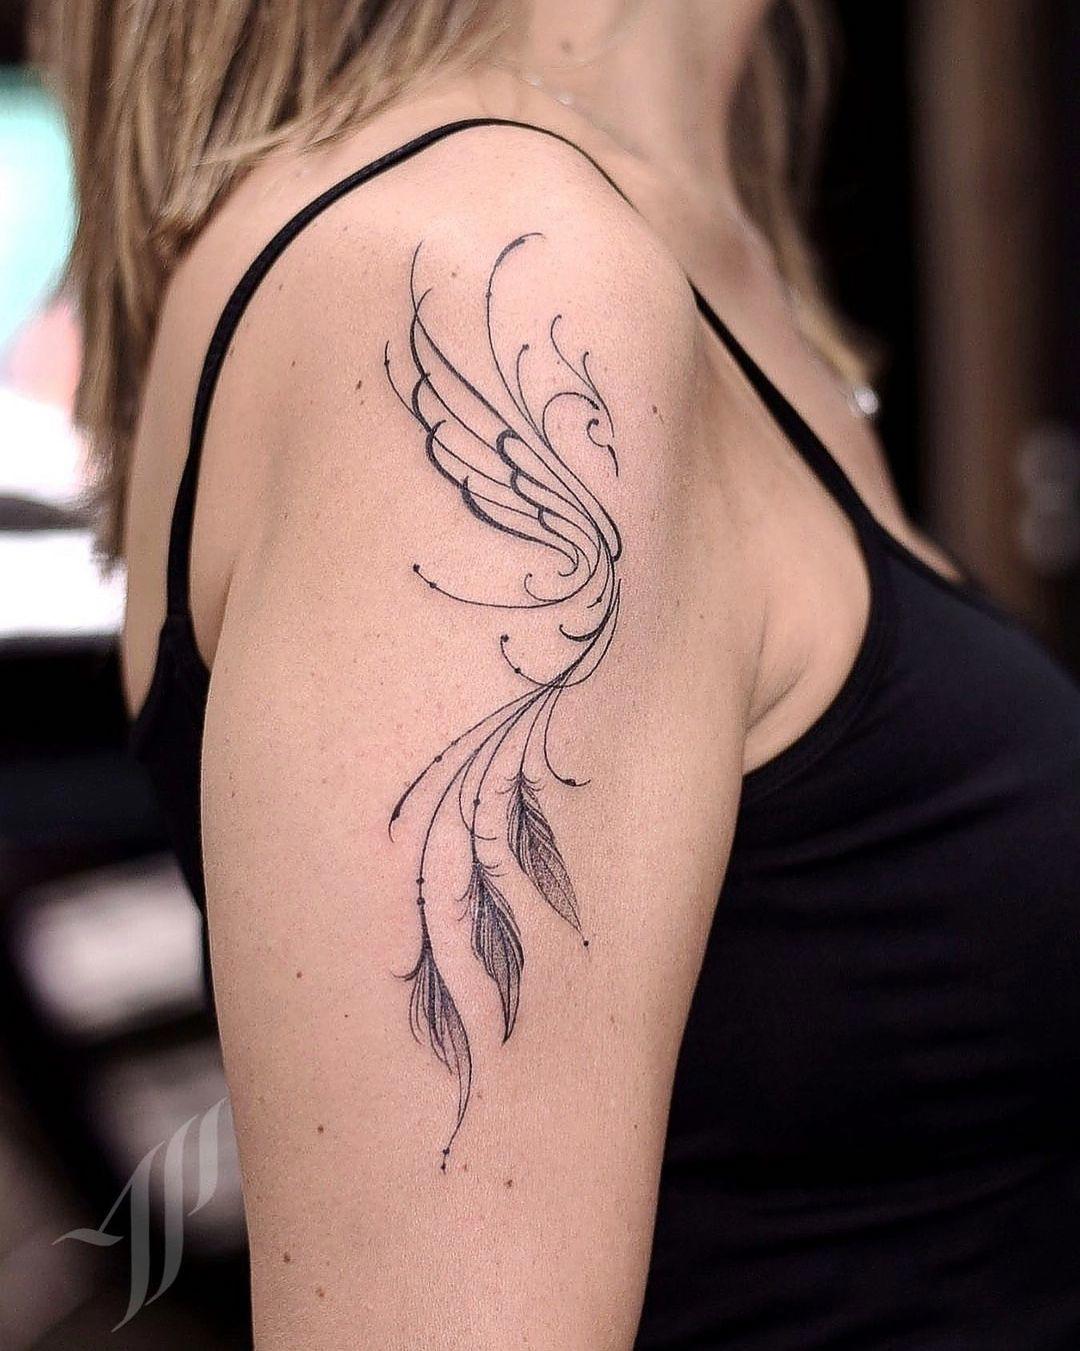 Tatuaje de ave fénix en brazo y hombro